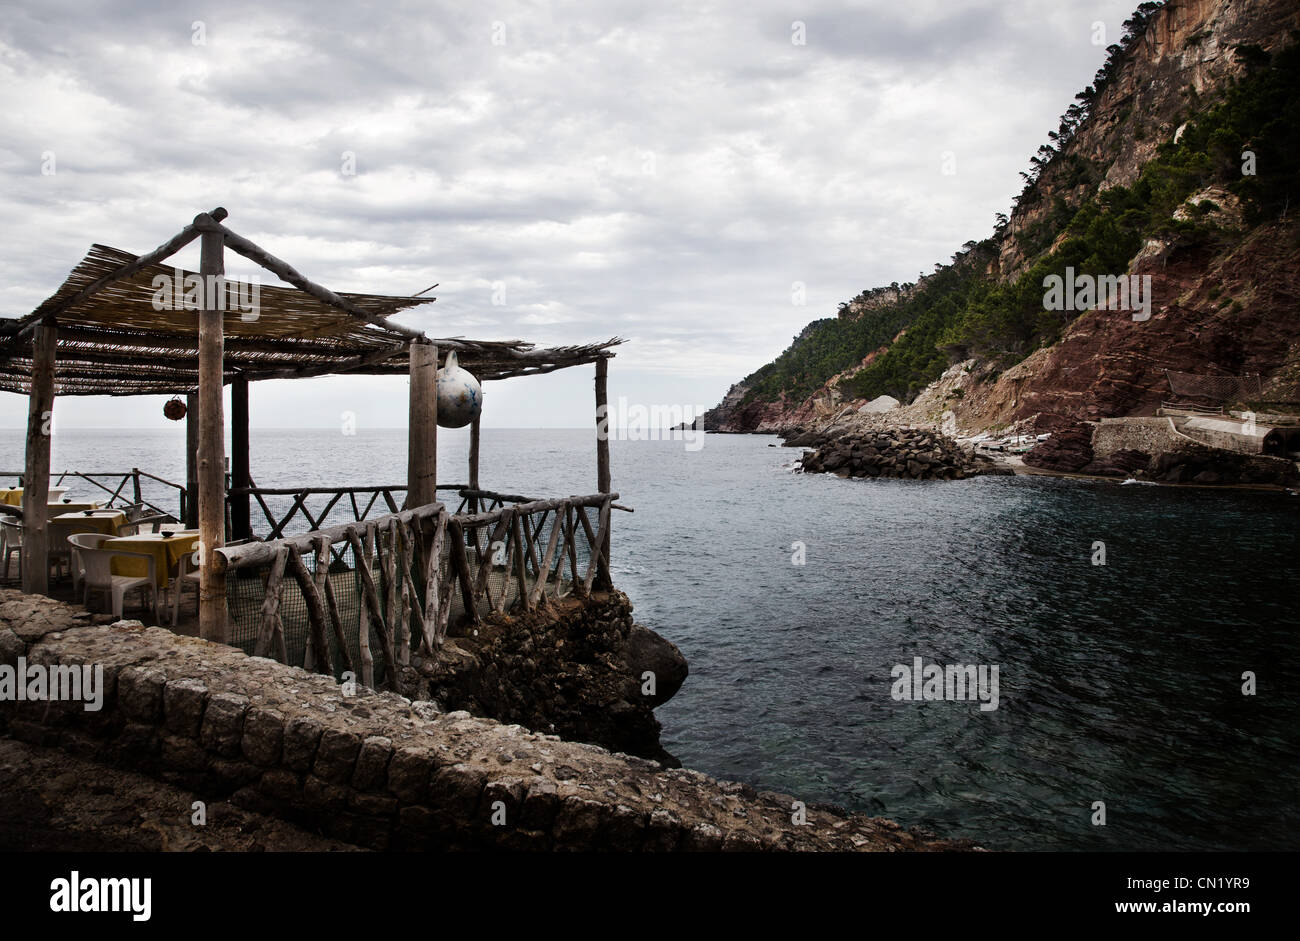 Hut on coast, Majorca, Spain Stock Photo